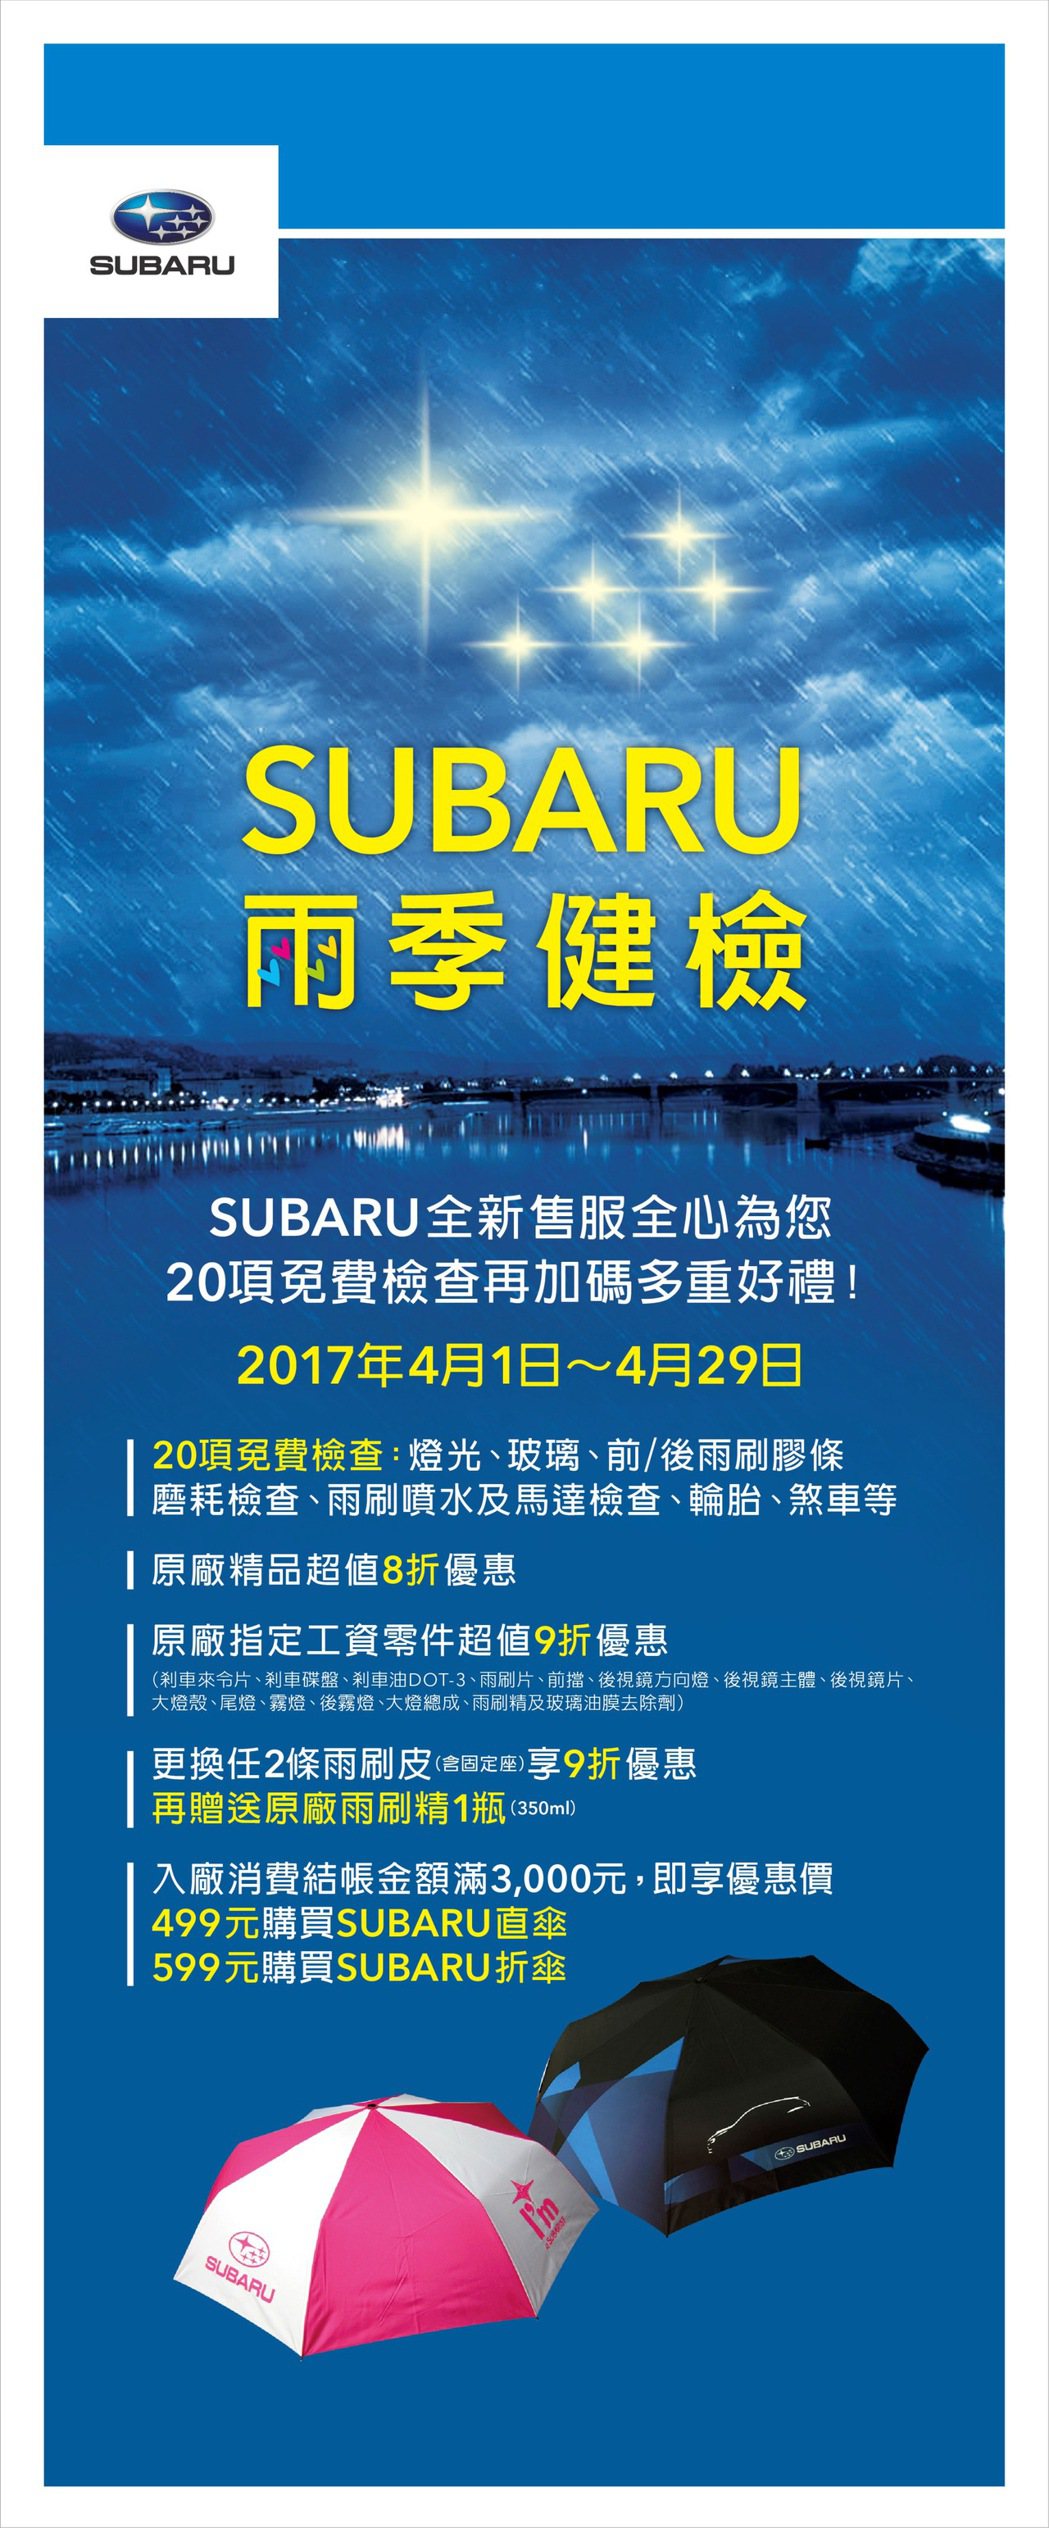 Subaru 提供